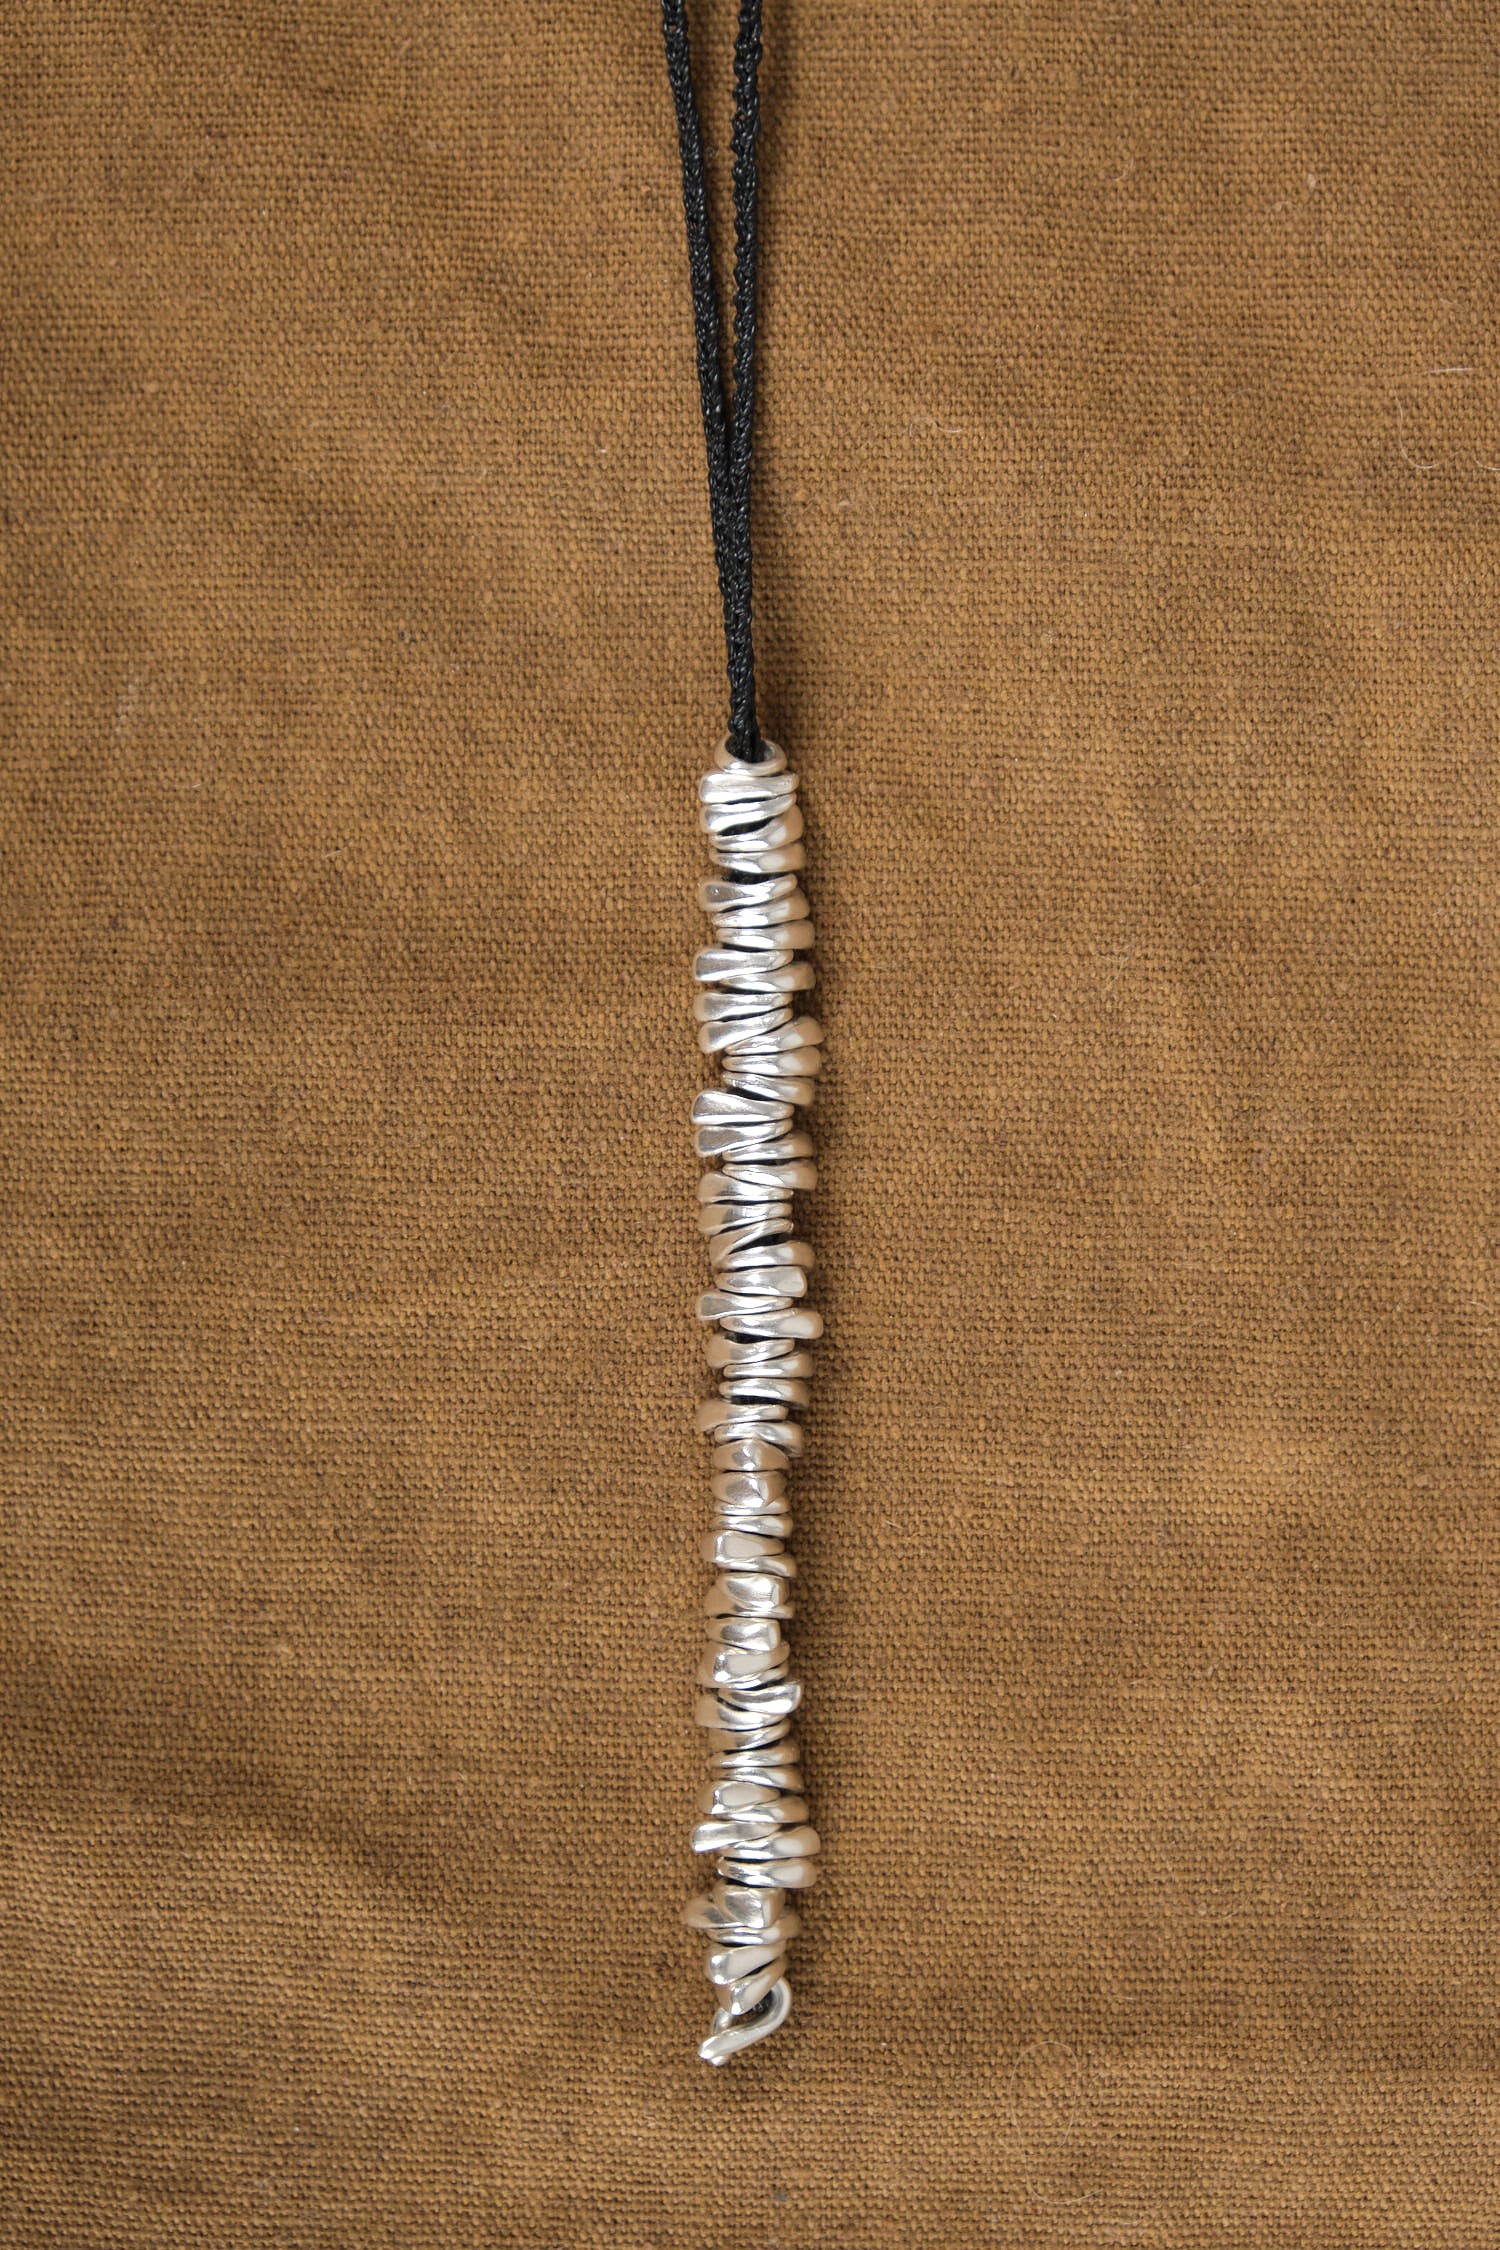 End of Birdbone on Long Gortex Necklace